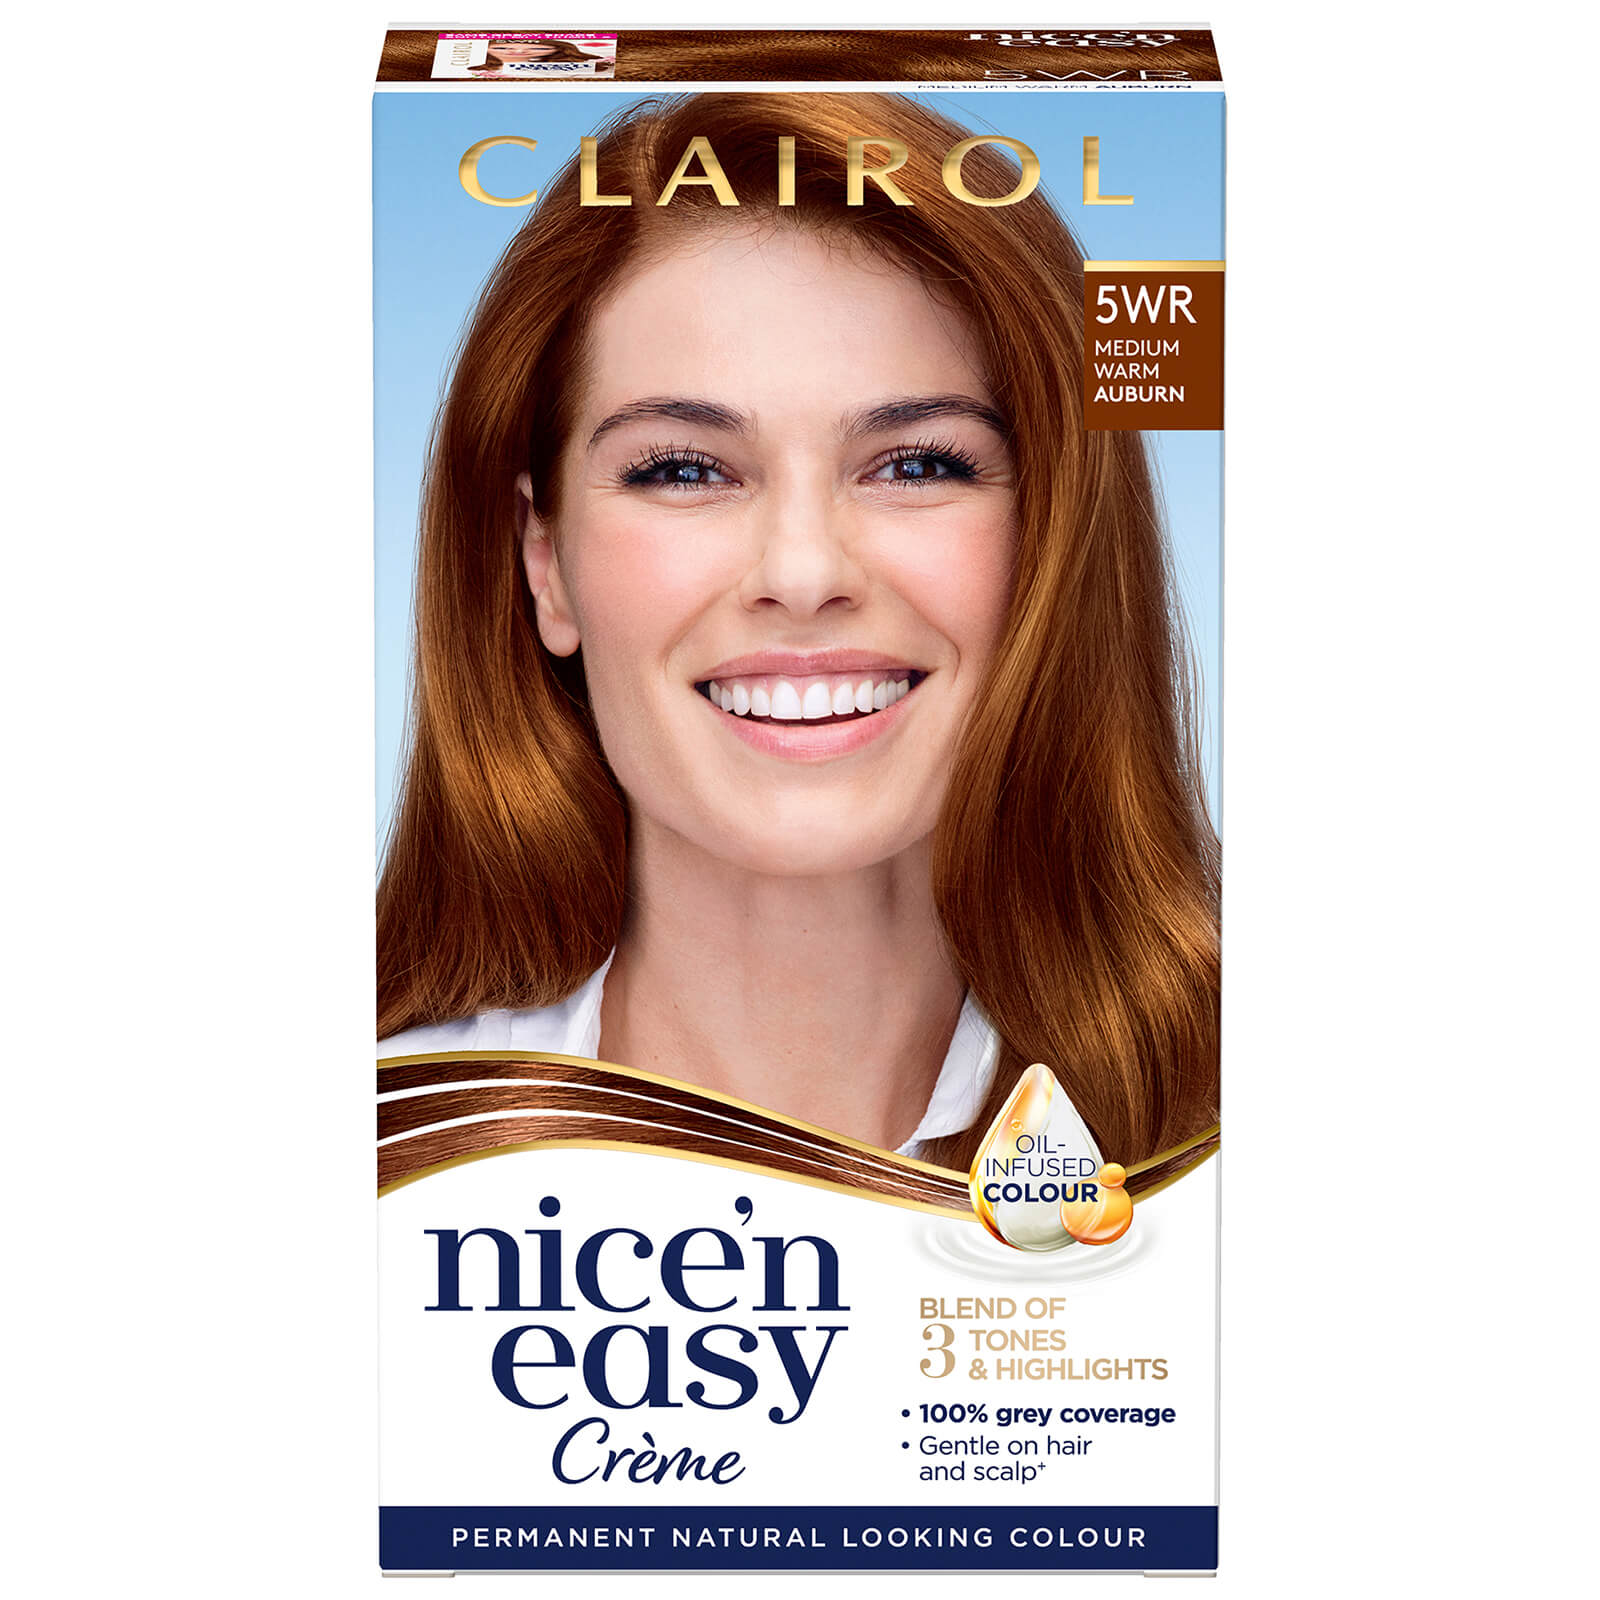 Clairol Nice' n Easy Crème Natural Looking Oil Infused Permanent Hair Dye 177ml (Various Shades) - 5WR Medium Warm Auburn